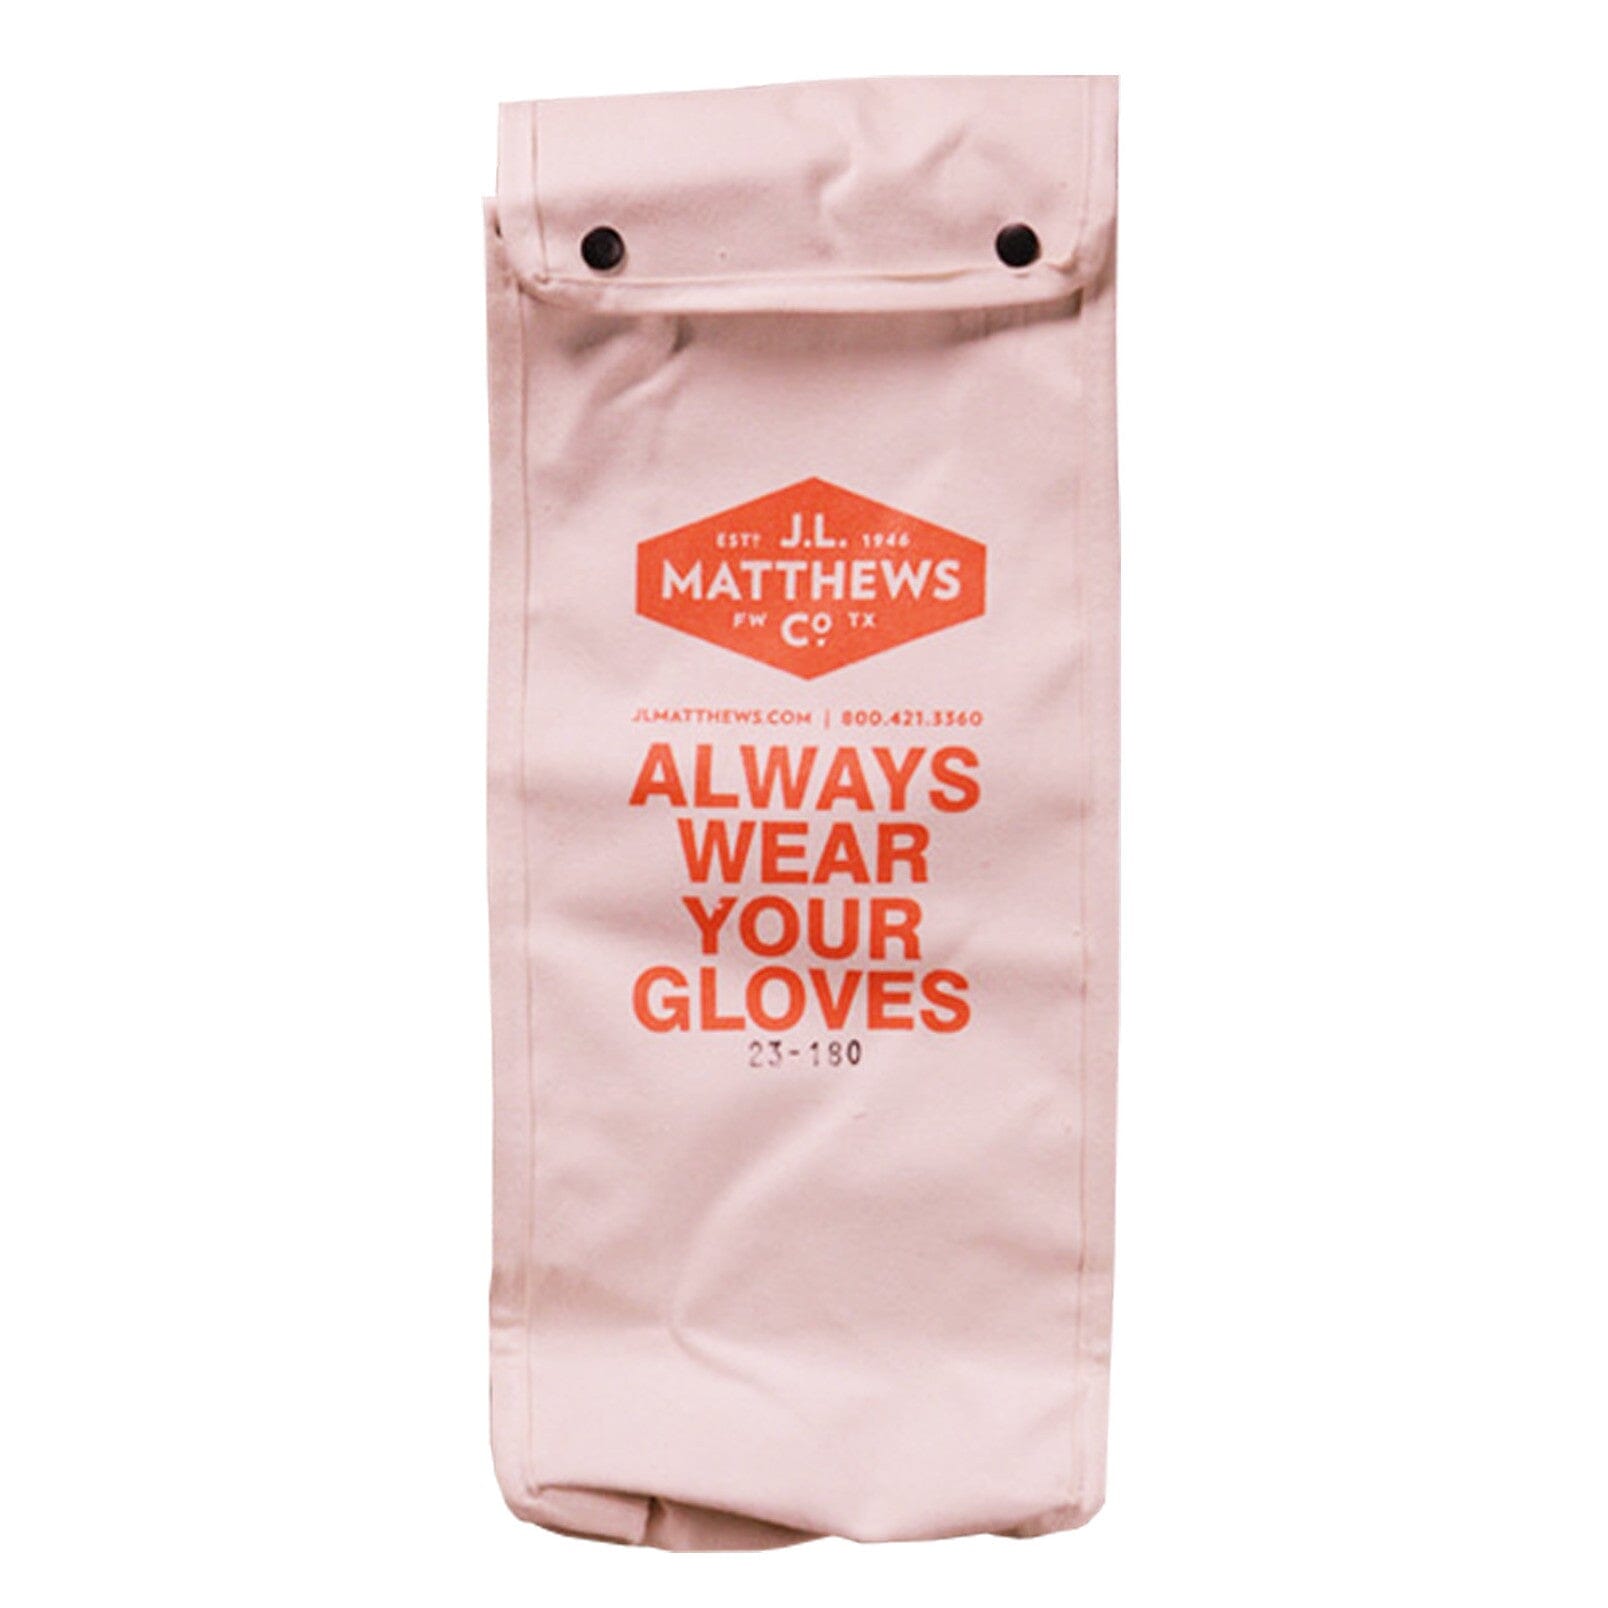 J.L. Matthews Canvas Glove Bag Lineman Glove Chamber - 23-180